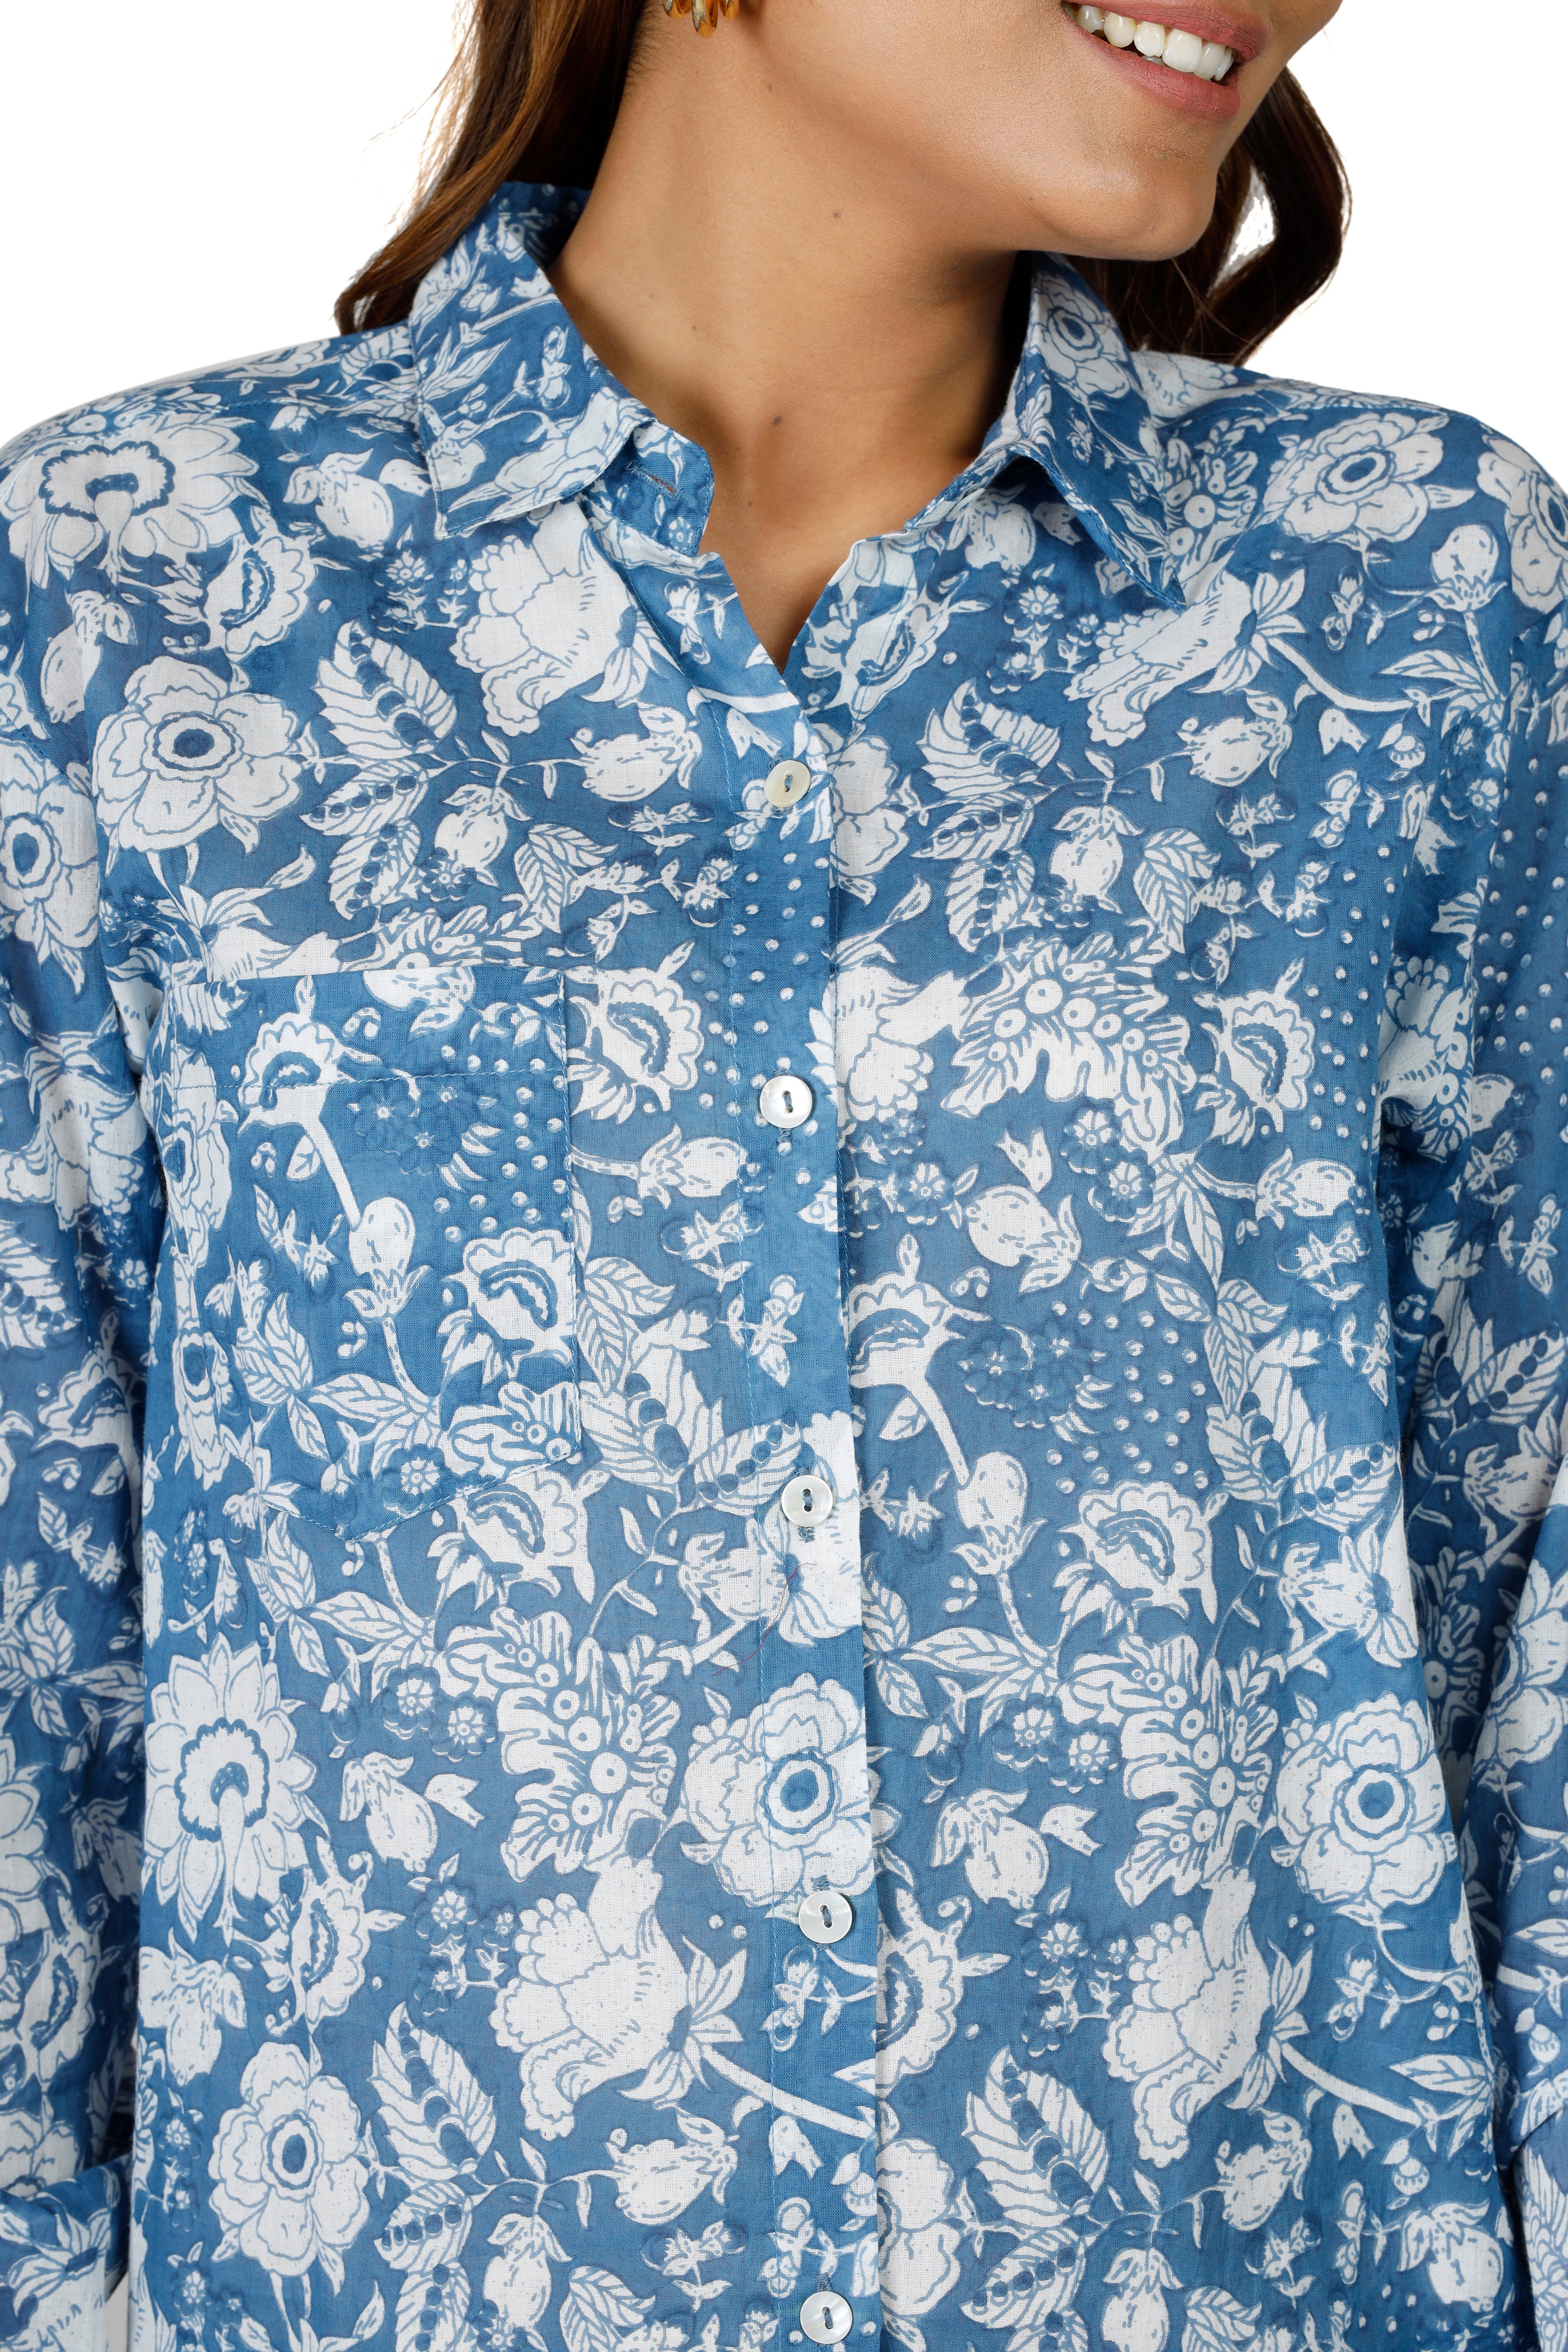 Guru-Shop Longbluse Handbedrucktes Boho luftiges.. alternative Langarmhemd, Bekleidung hellblau